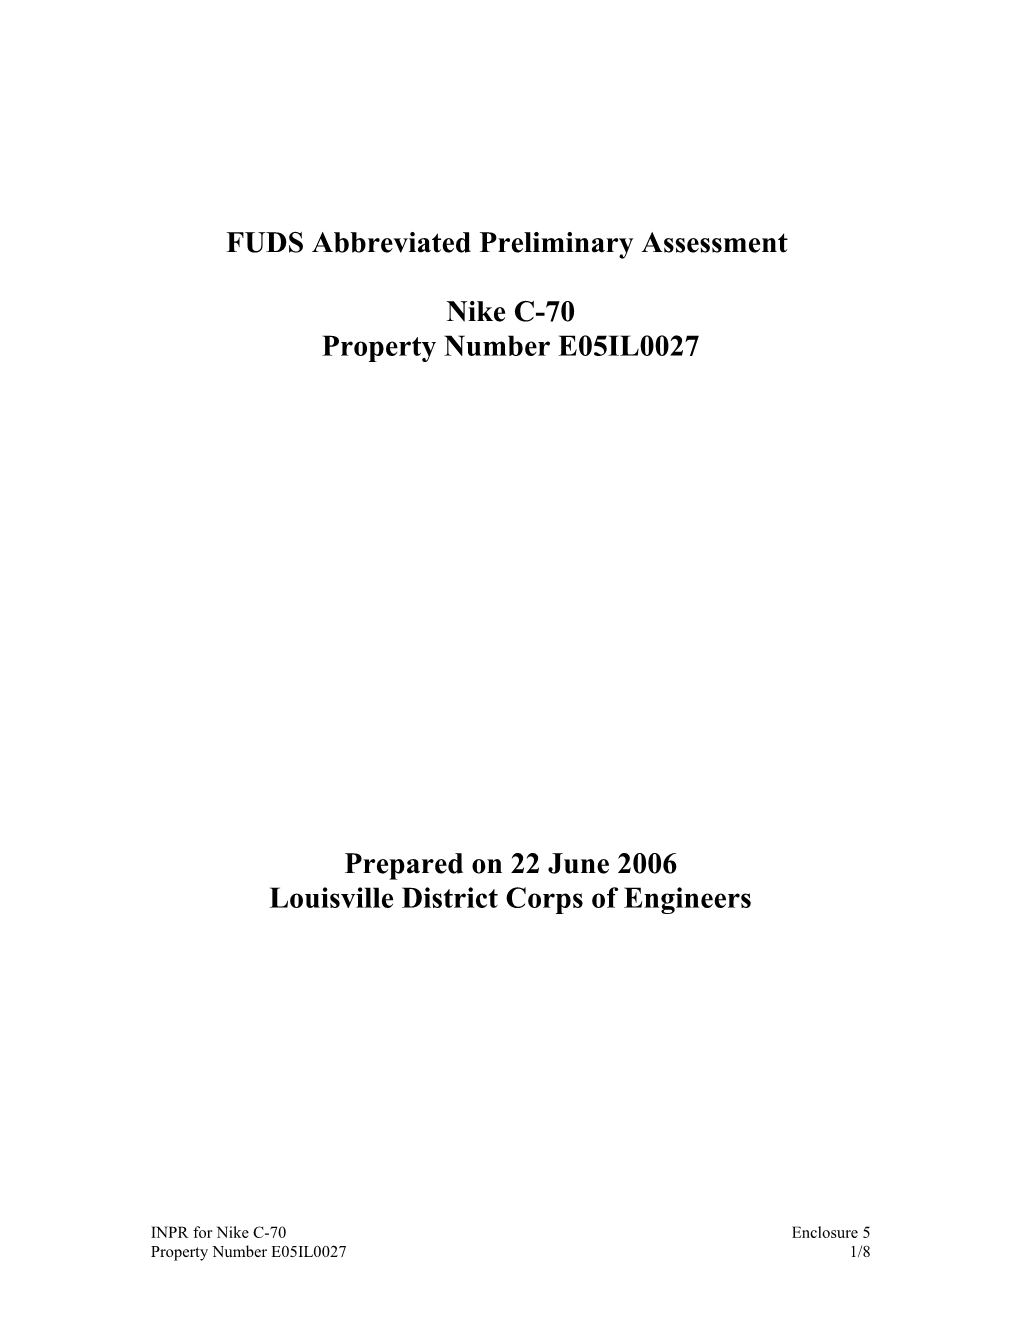 FUDS Abbreviated Preliminary Assessment Outline